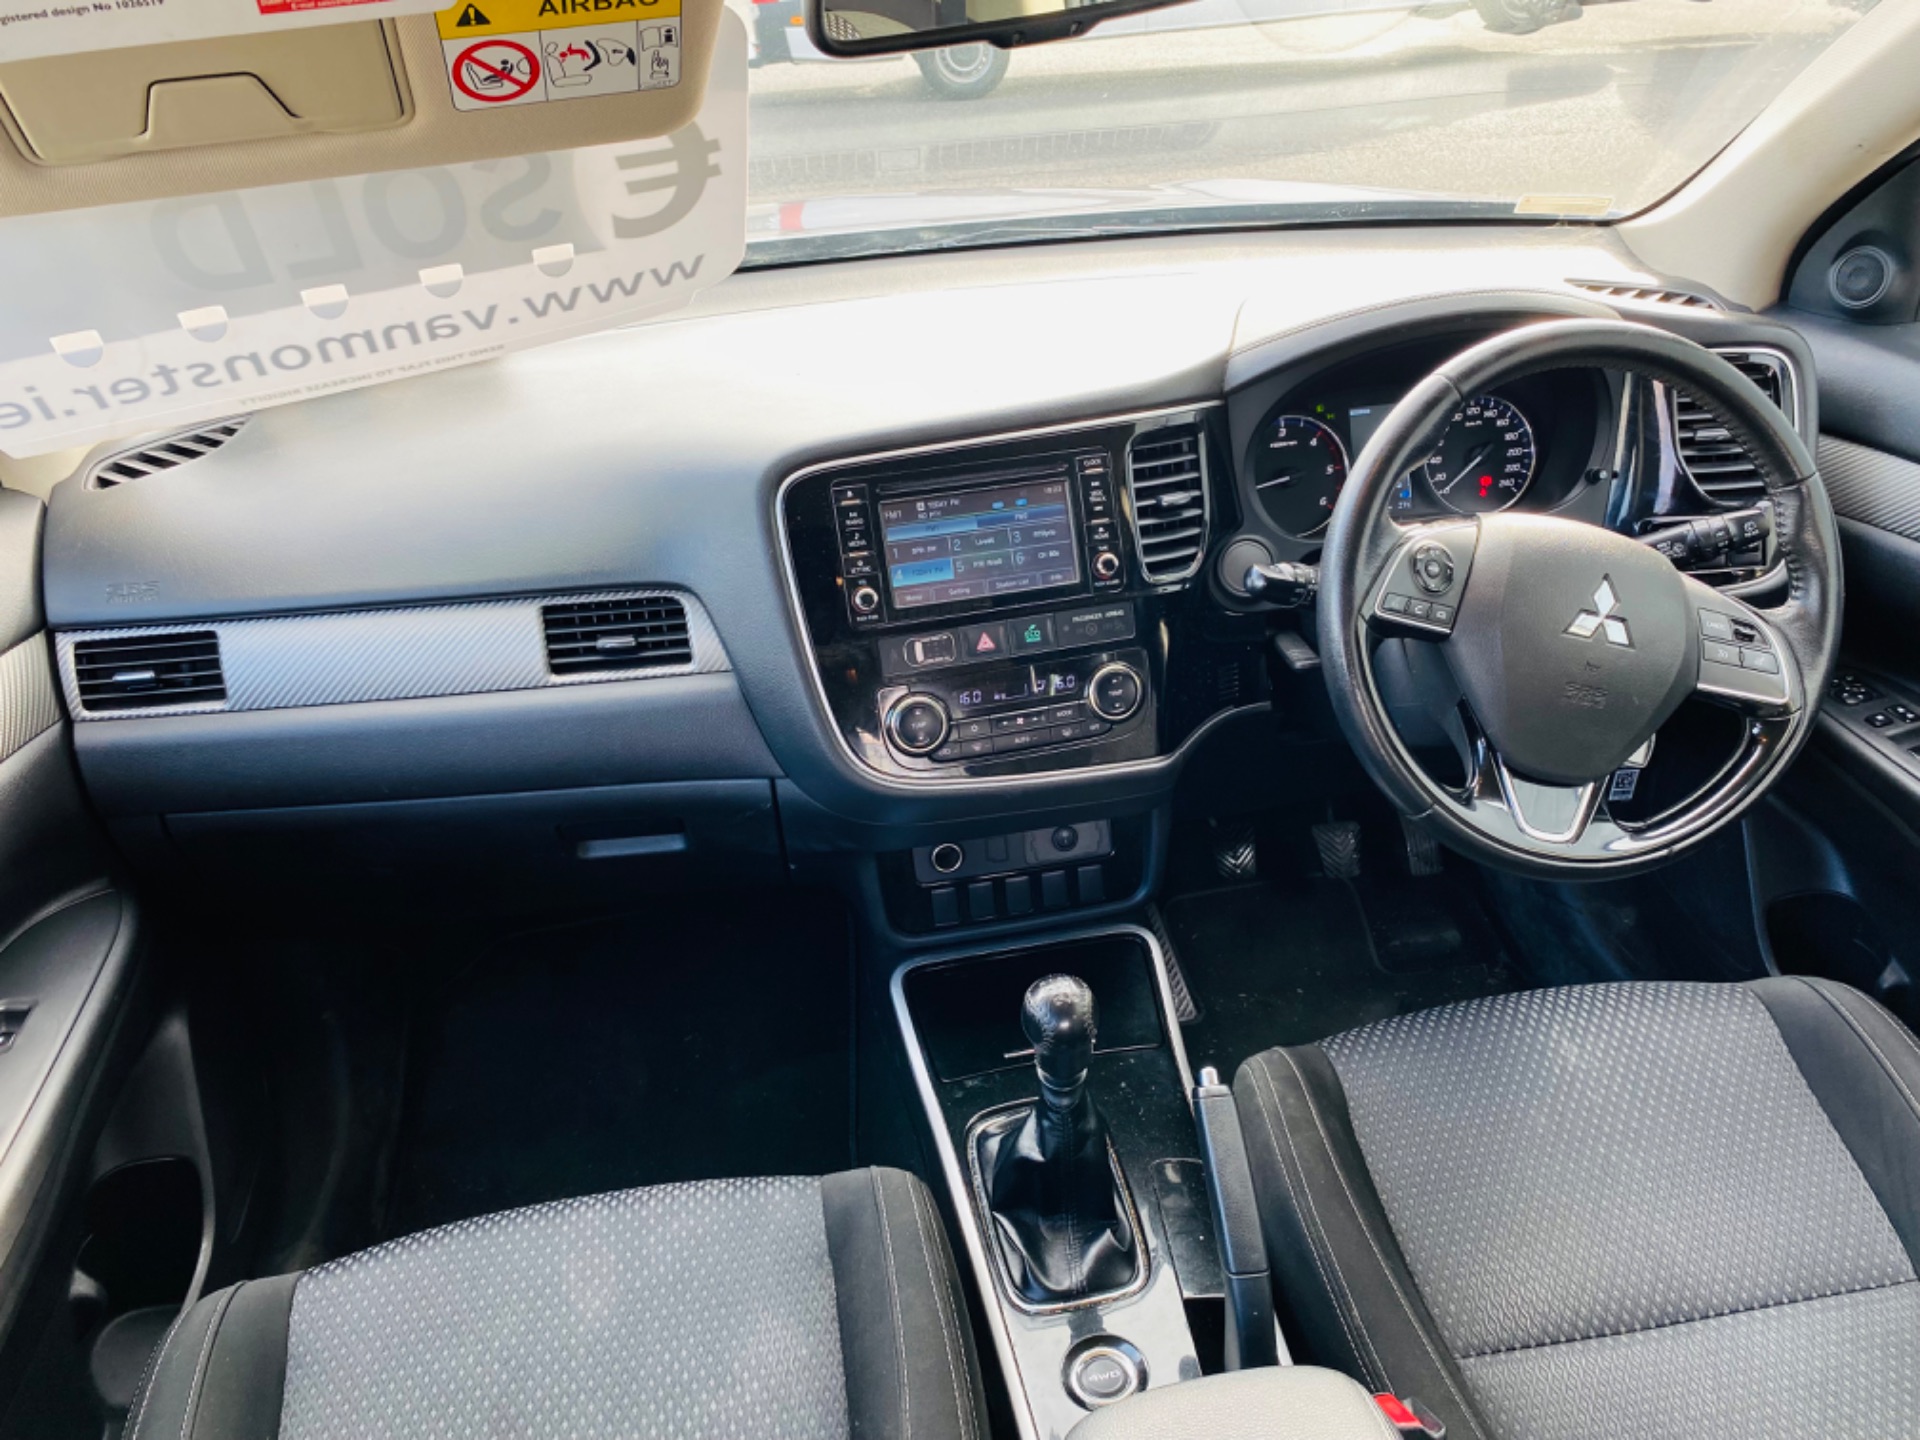 2019 Mitsubishi Outlander Outl 4WD 6MT N1 17MY 4DR (191D8665) Thumbnail 10